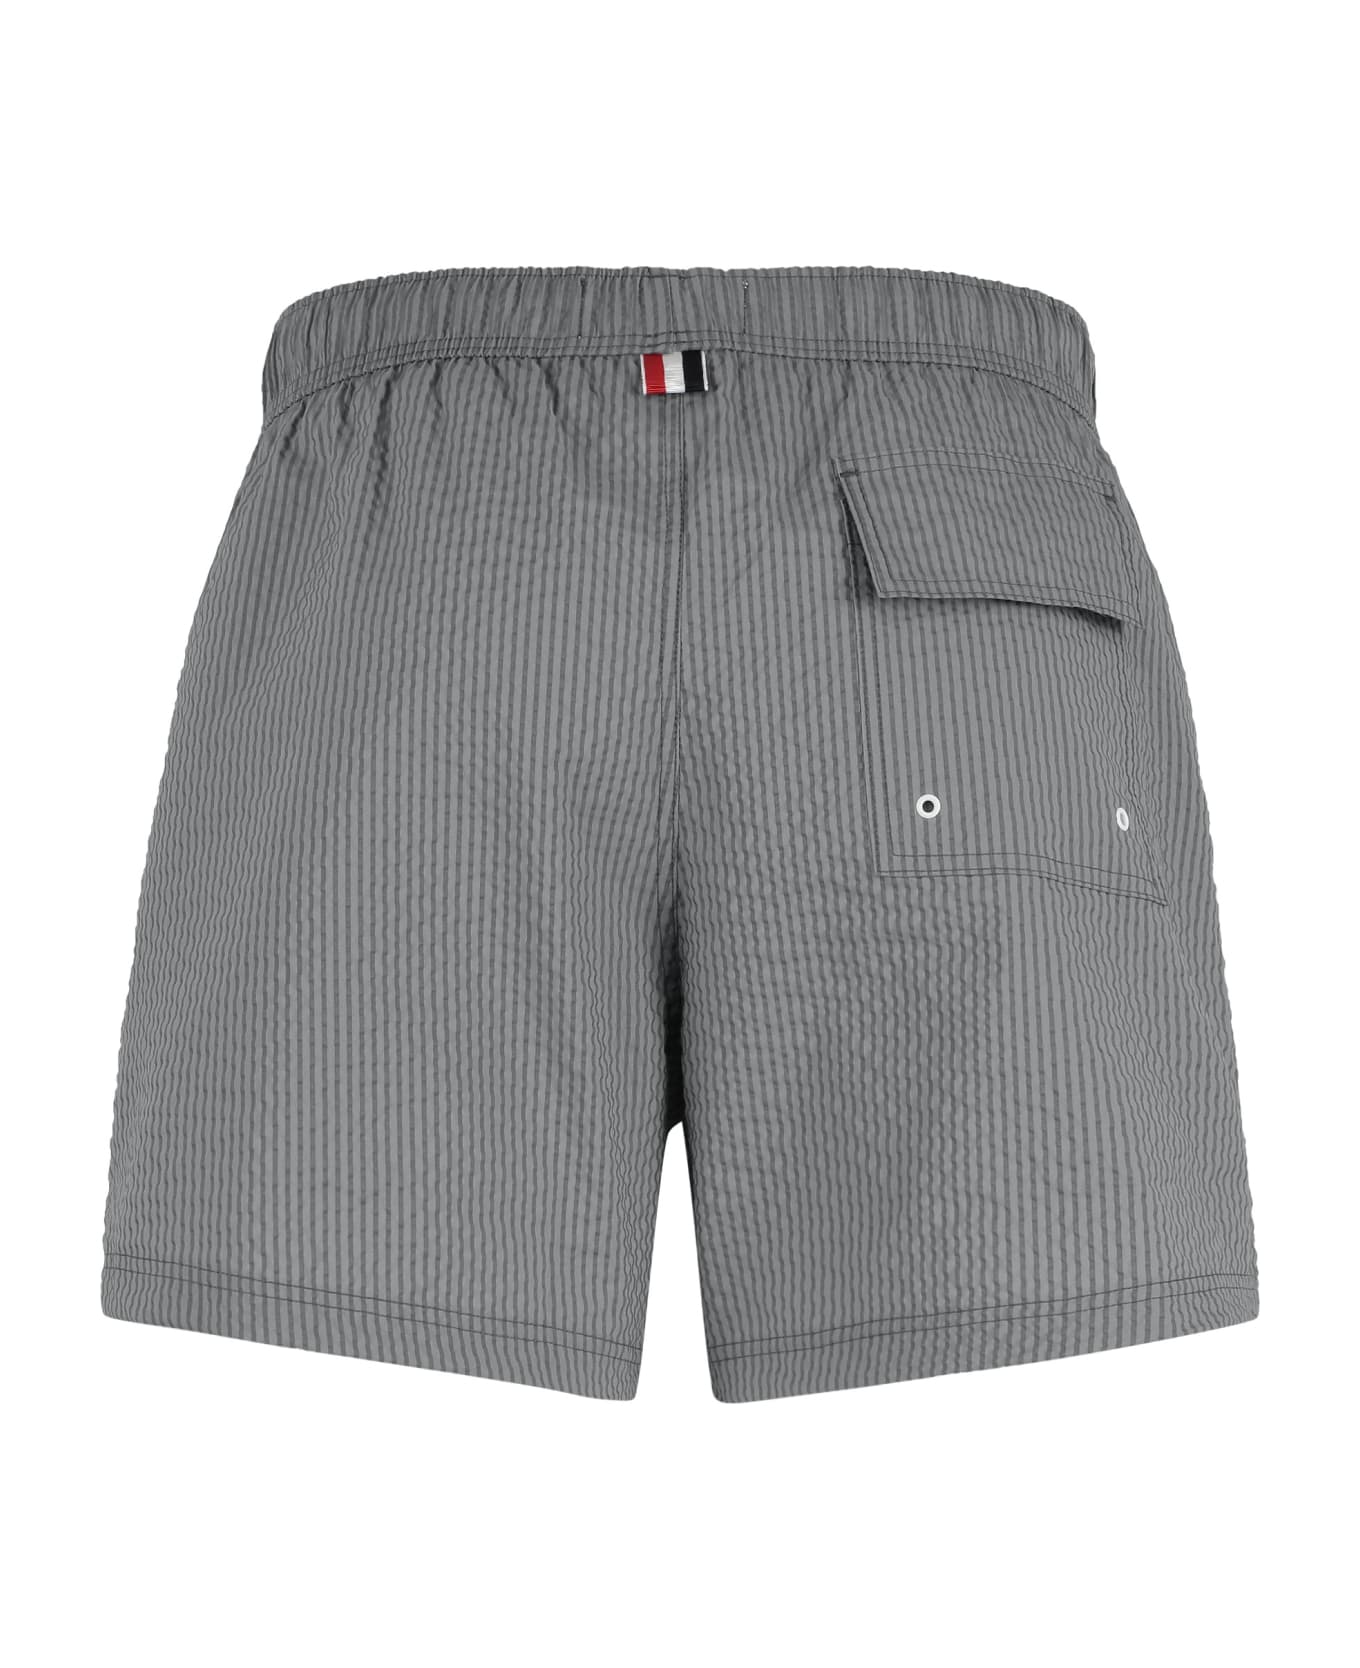 Thom Browne Nylon Swim Shorts - grey